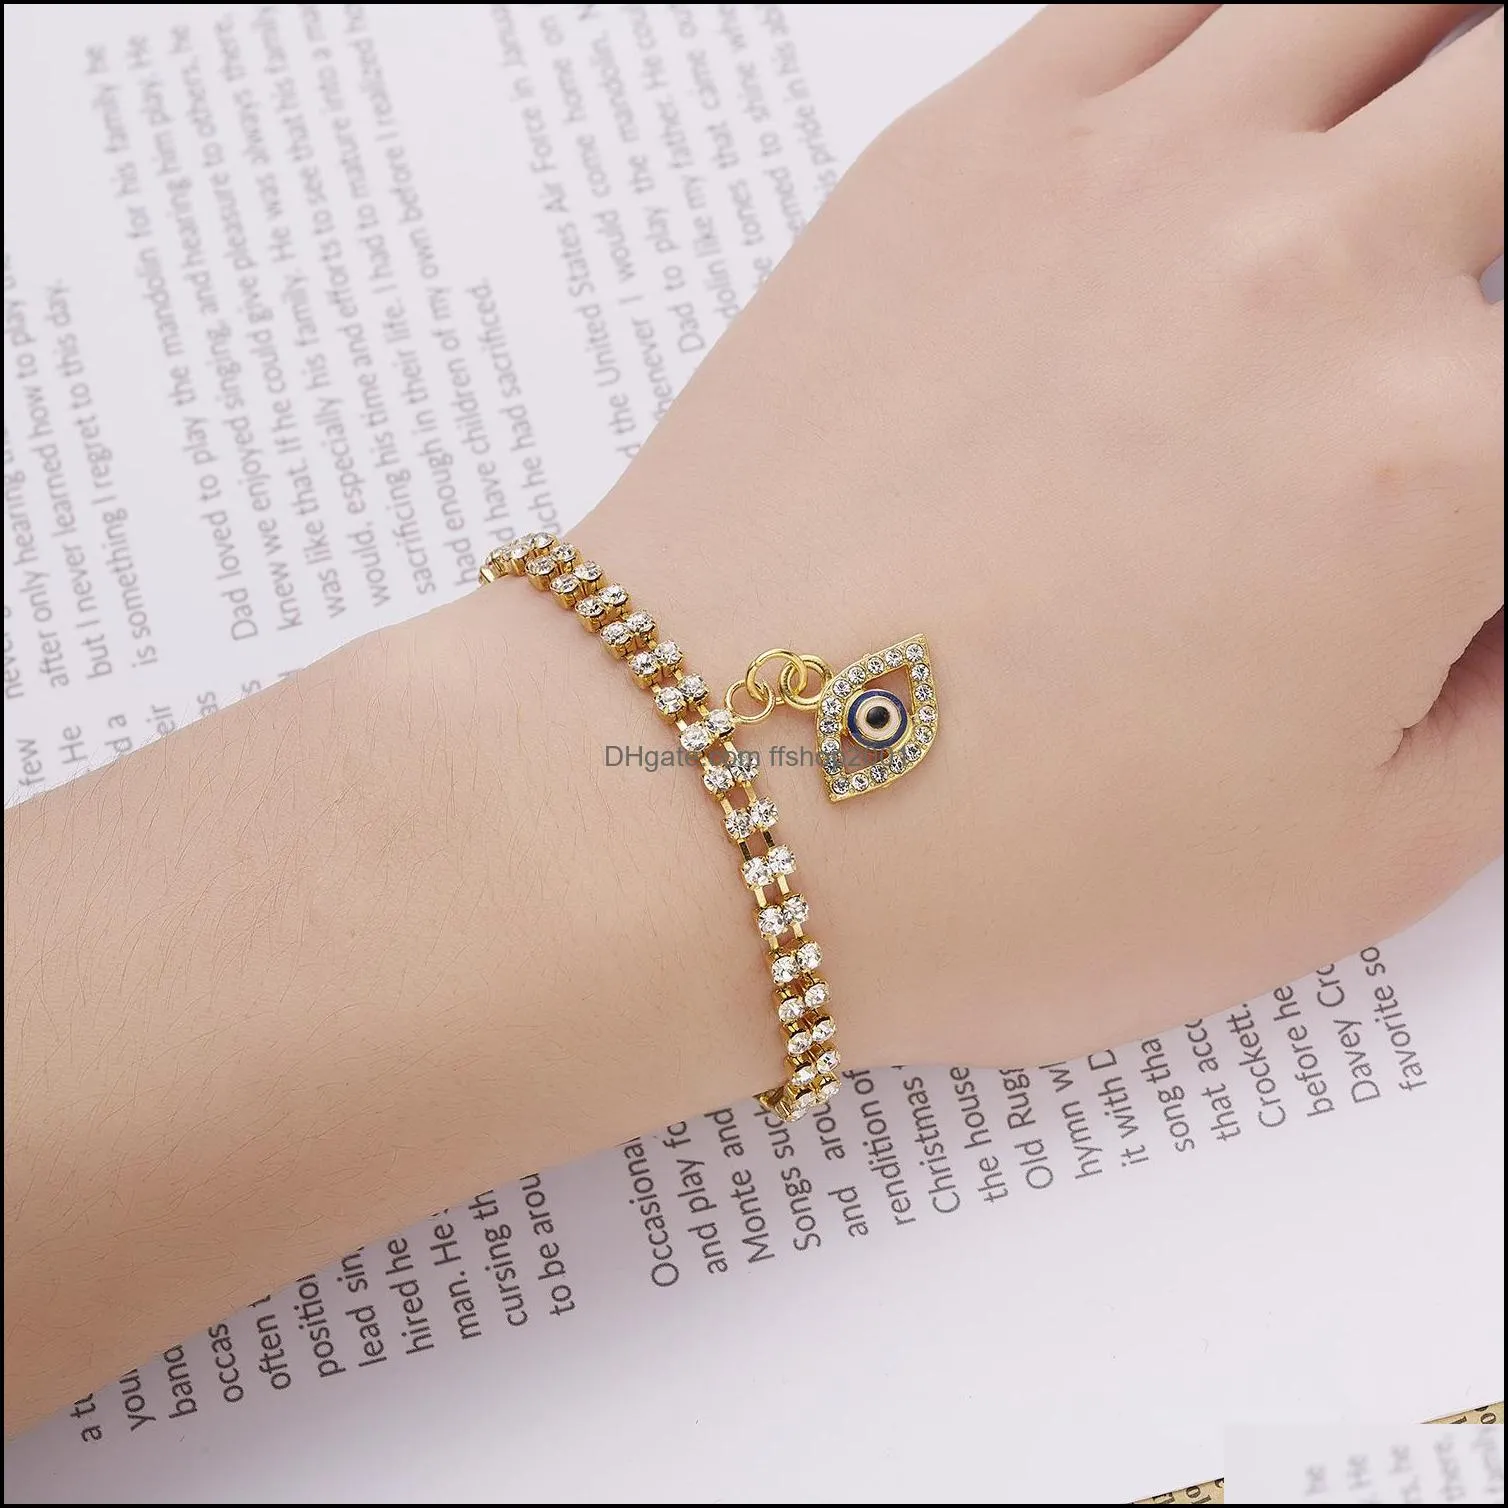  blue evil eye bracelets for women hand heart starfish charm crystal tennis chain bange female fashion party jewelry gift